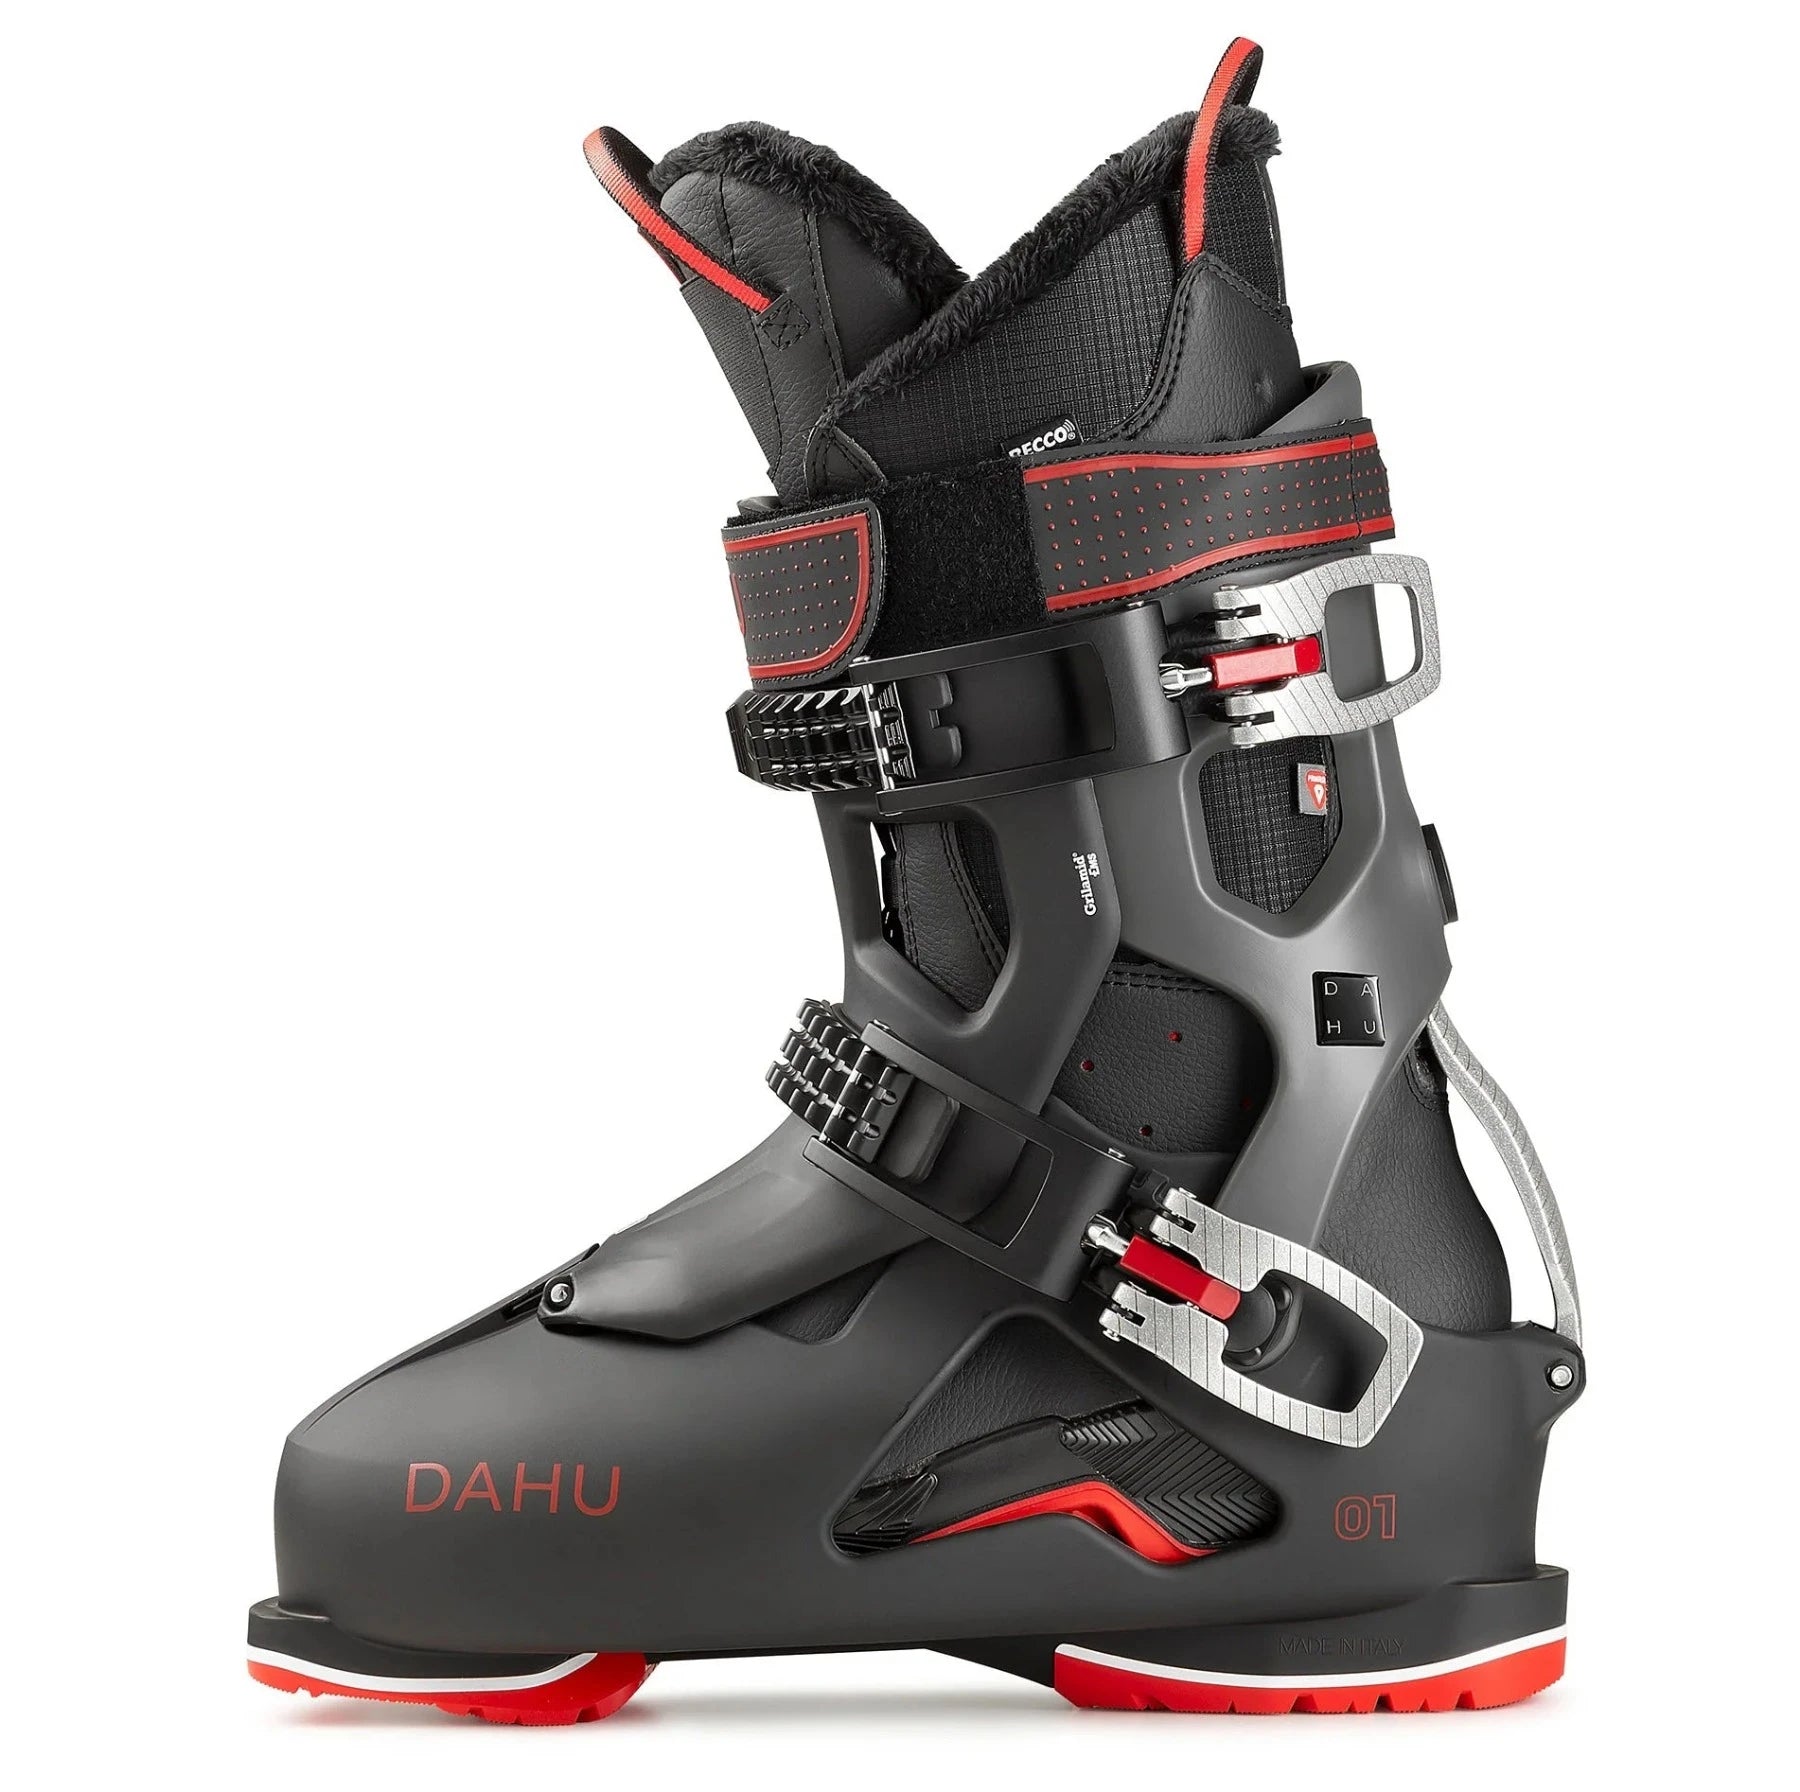 Dahu Ecorce 01 M120 Ski Boots